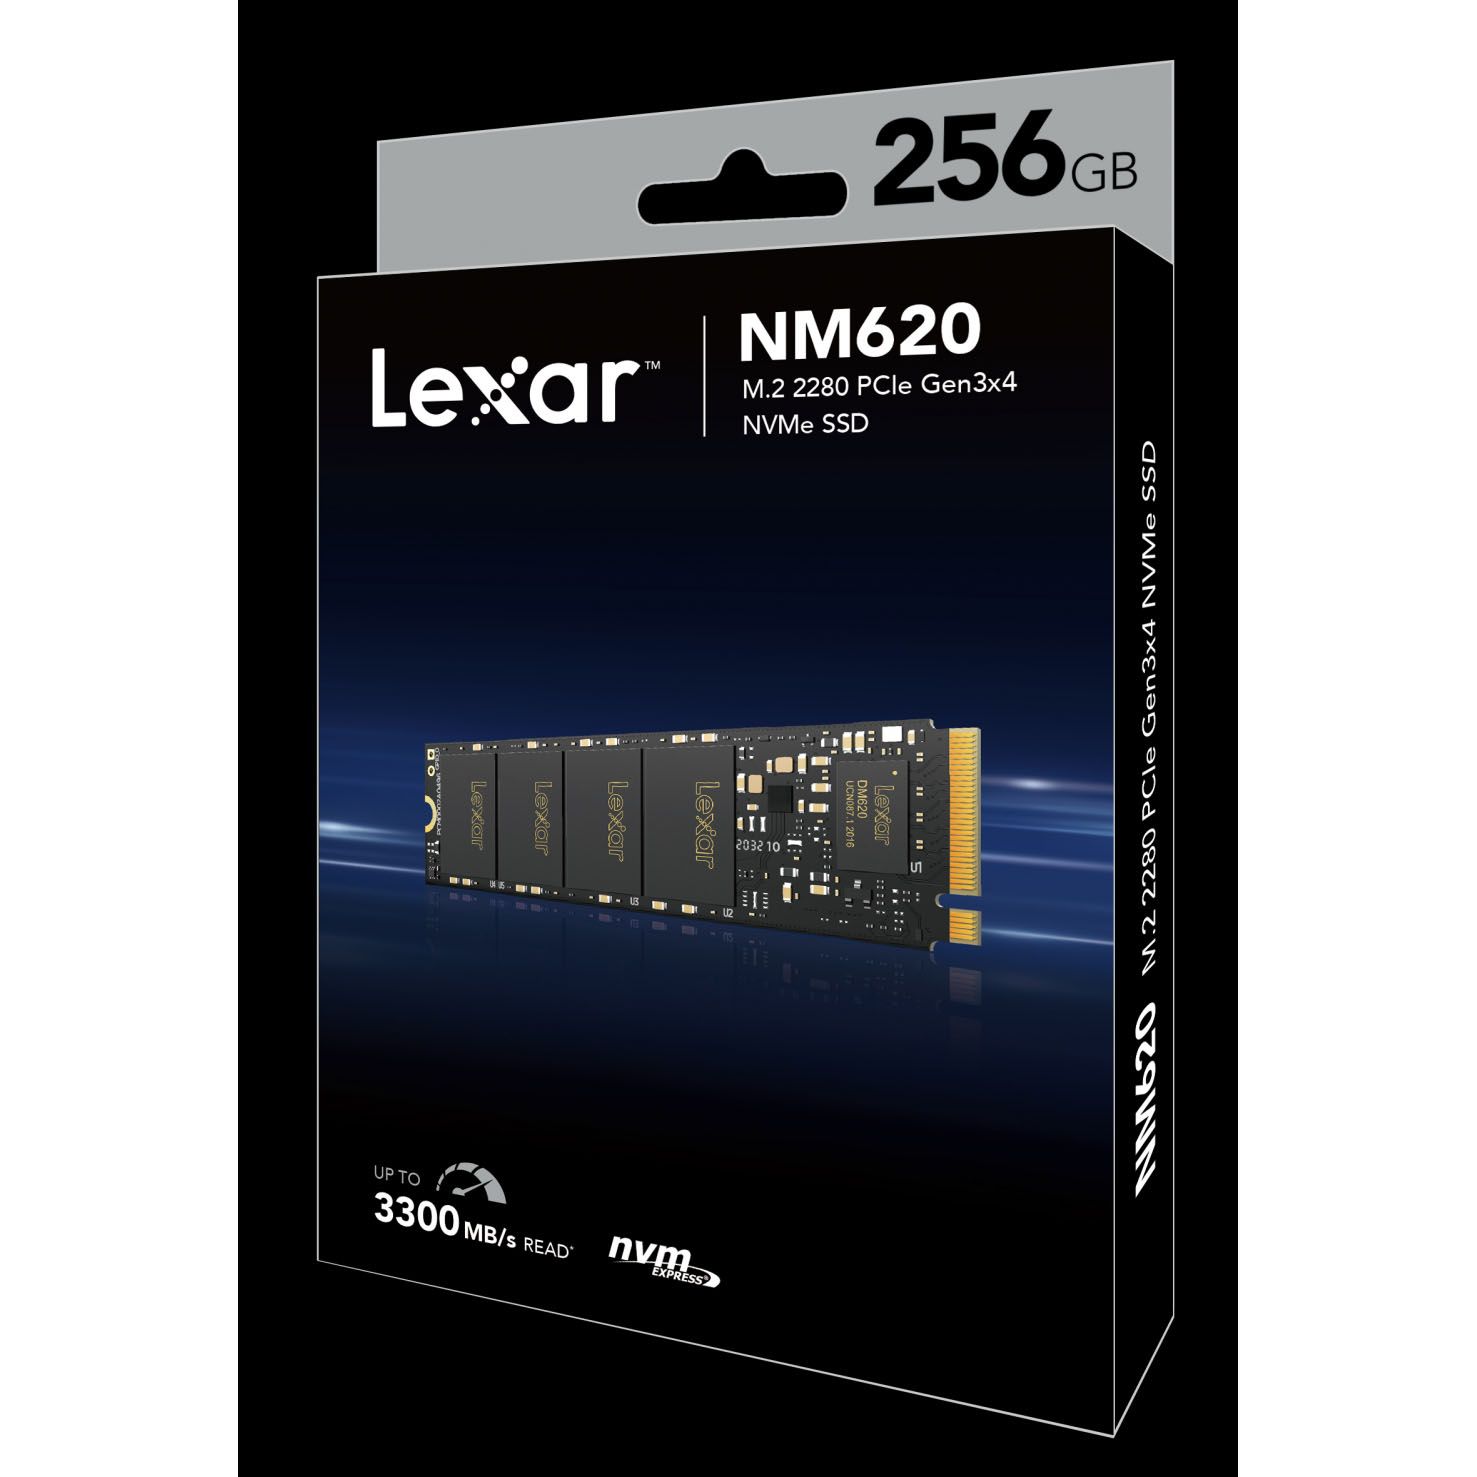  Ổ cứng SSD Lexar NM620-256GB M.2 2280 PCIe 